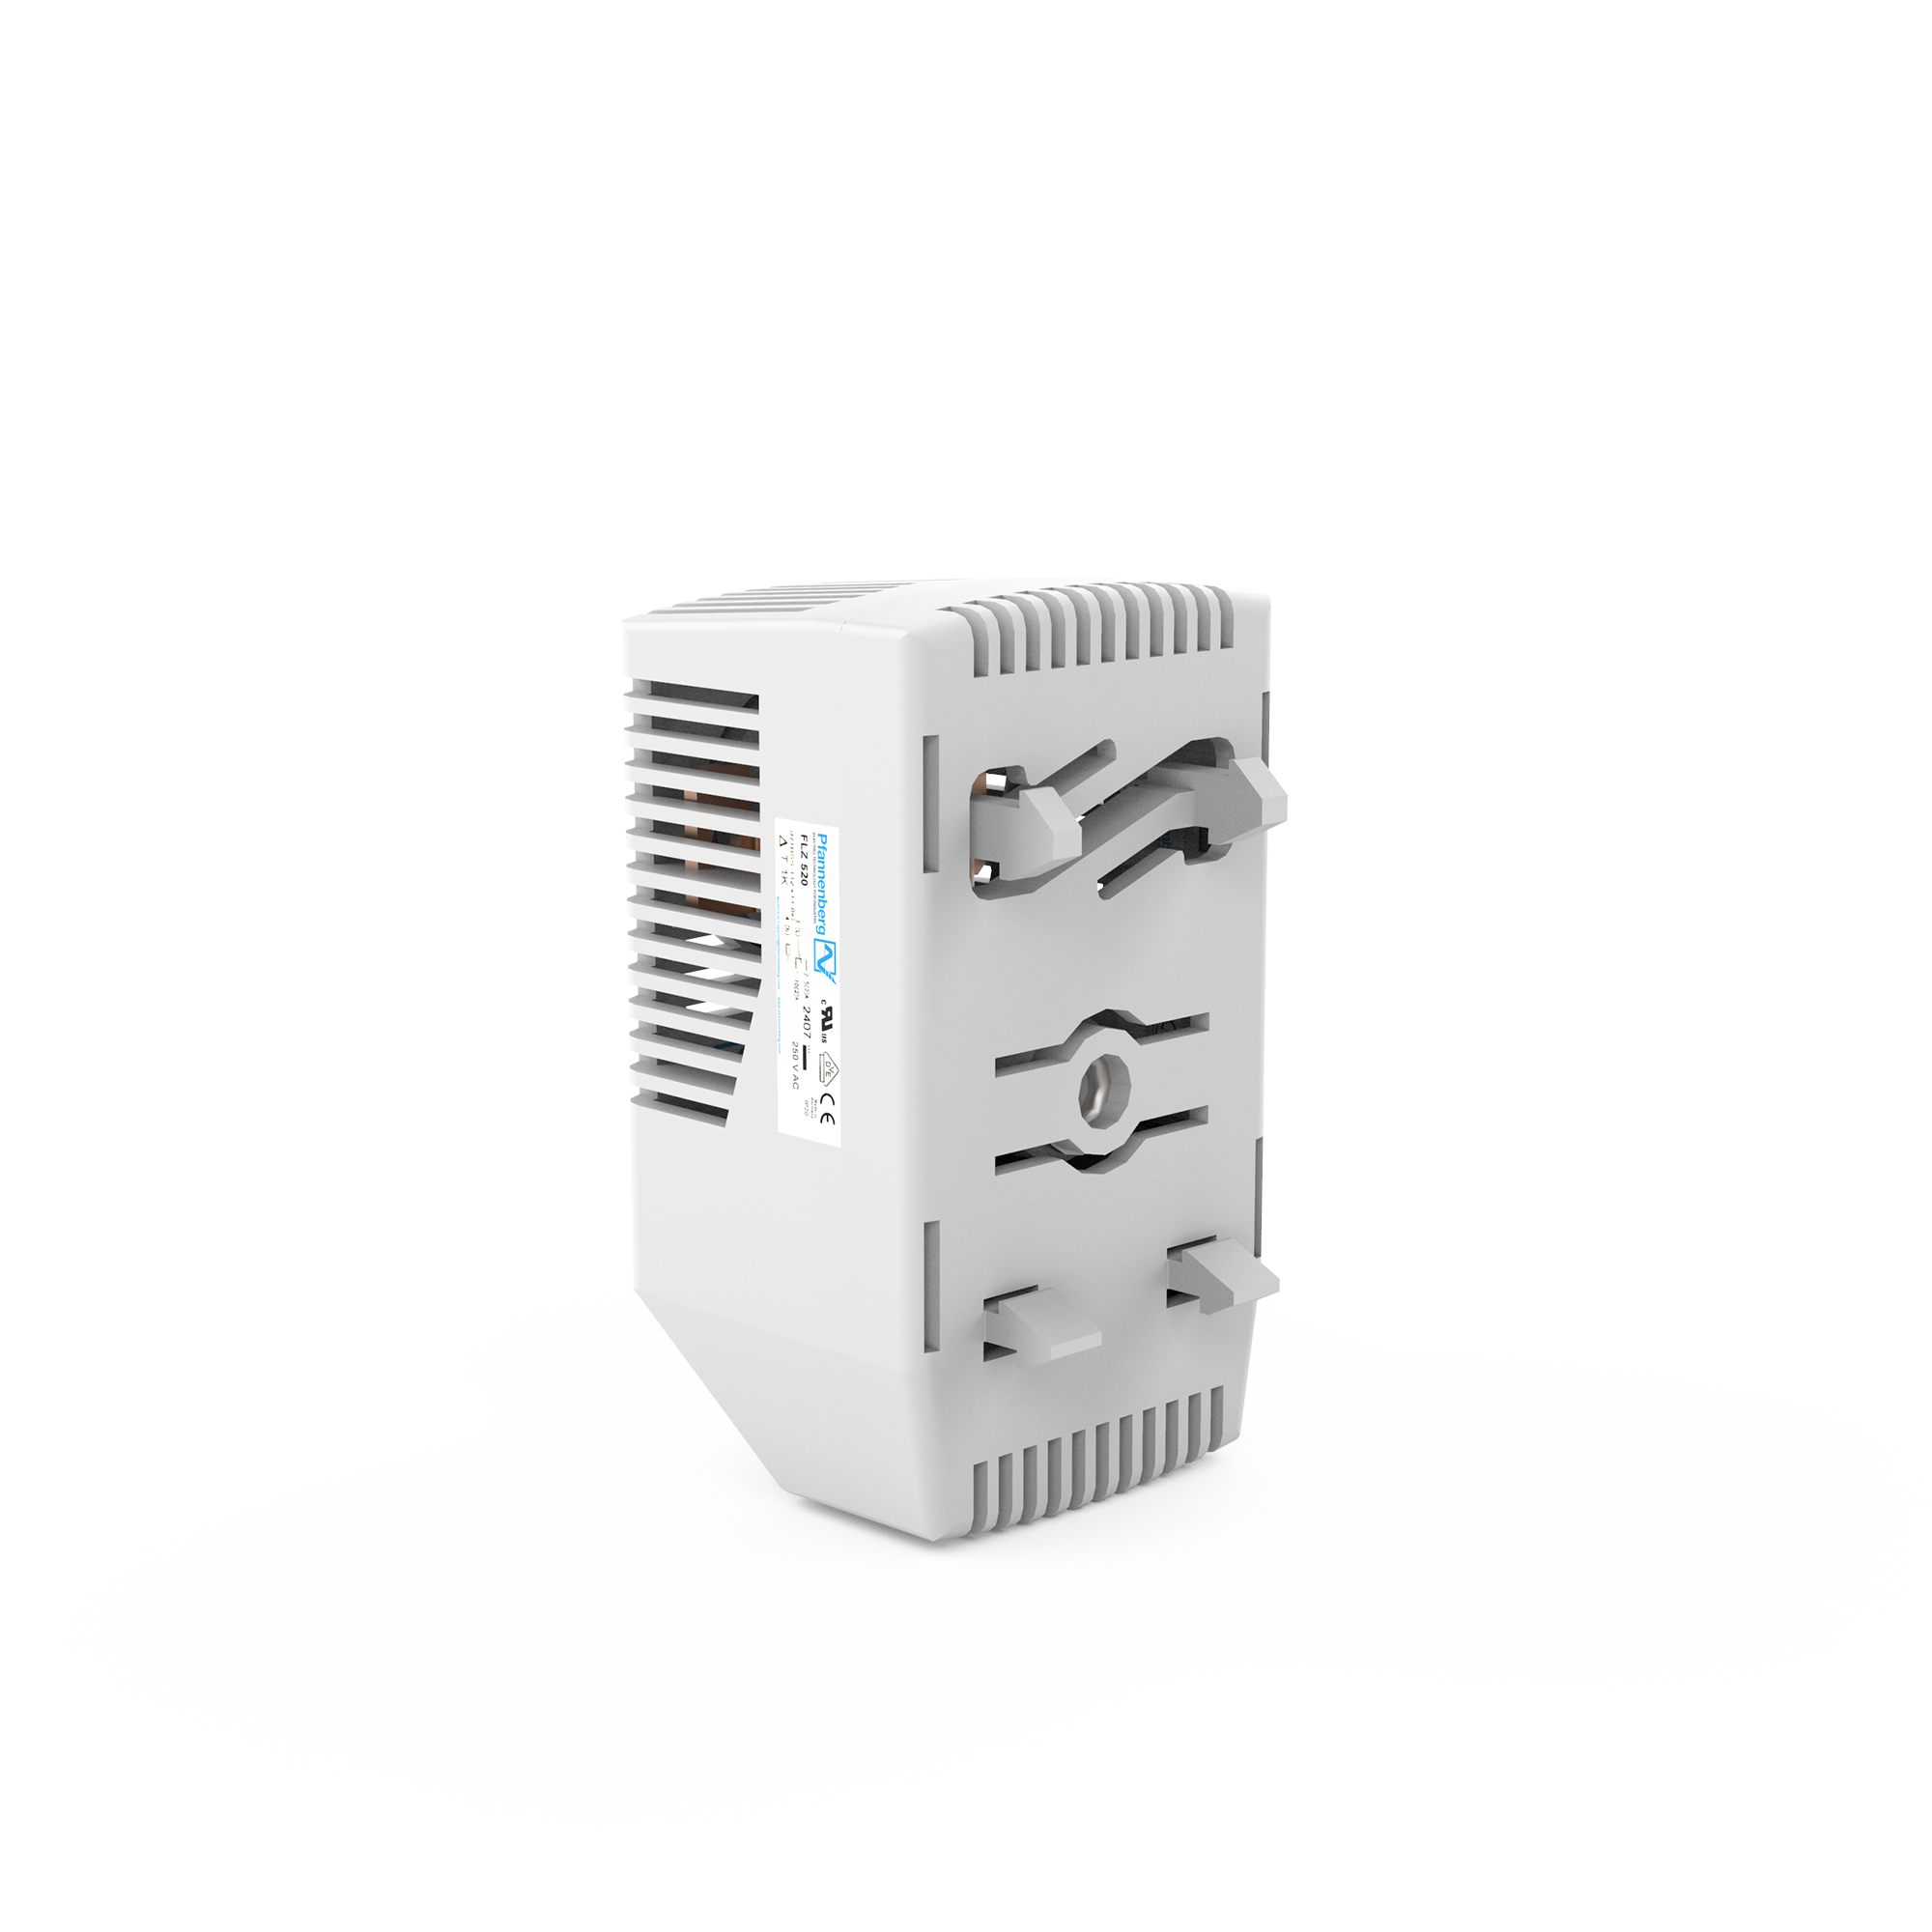 Thermostat FLZ520 UL,N.C.,0-60C,